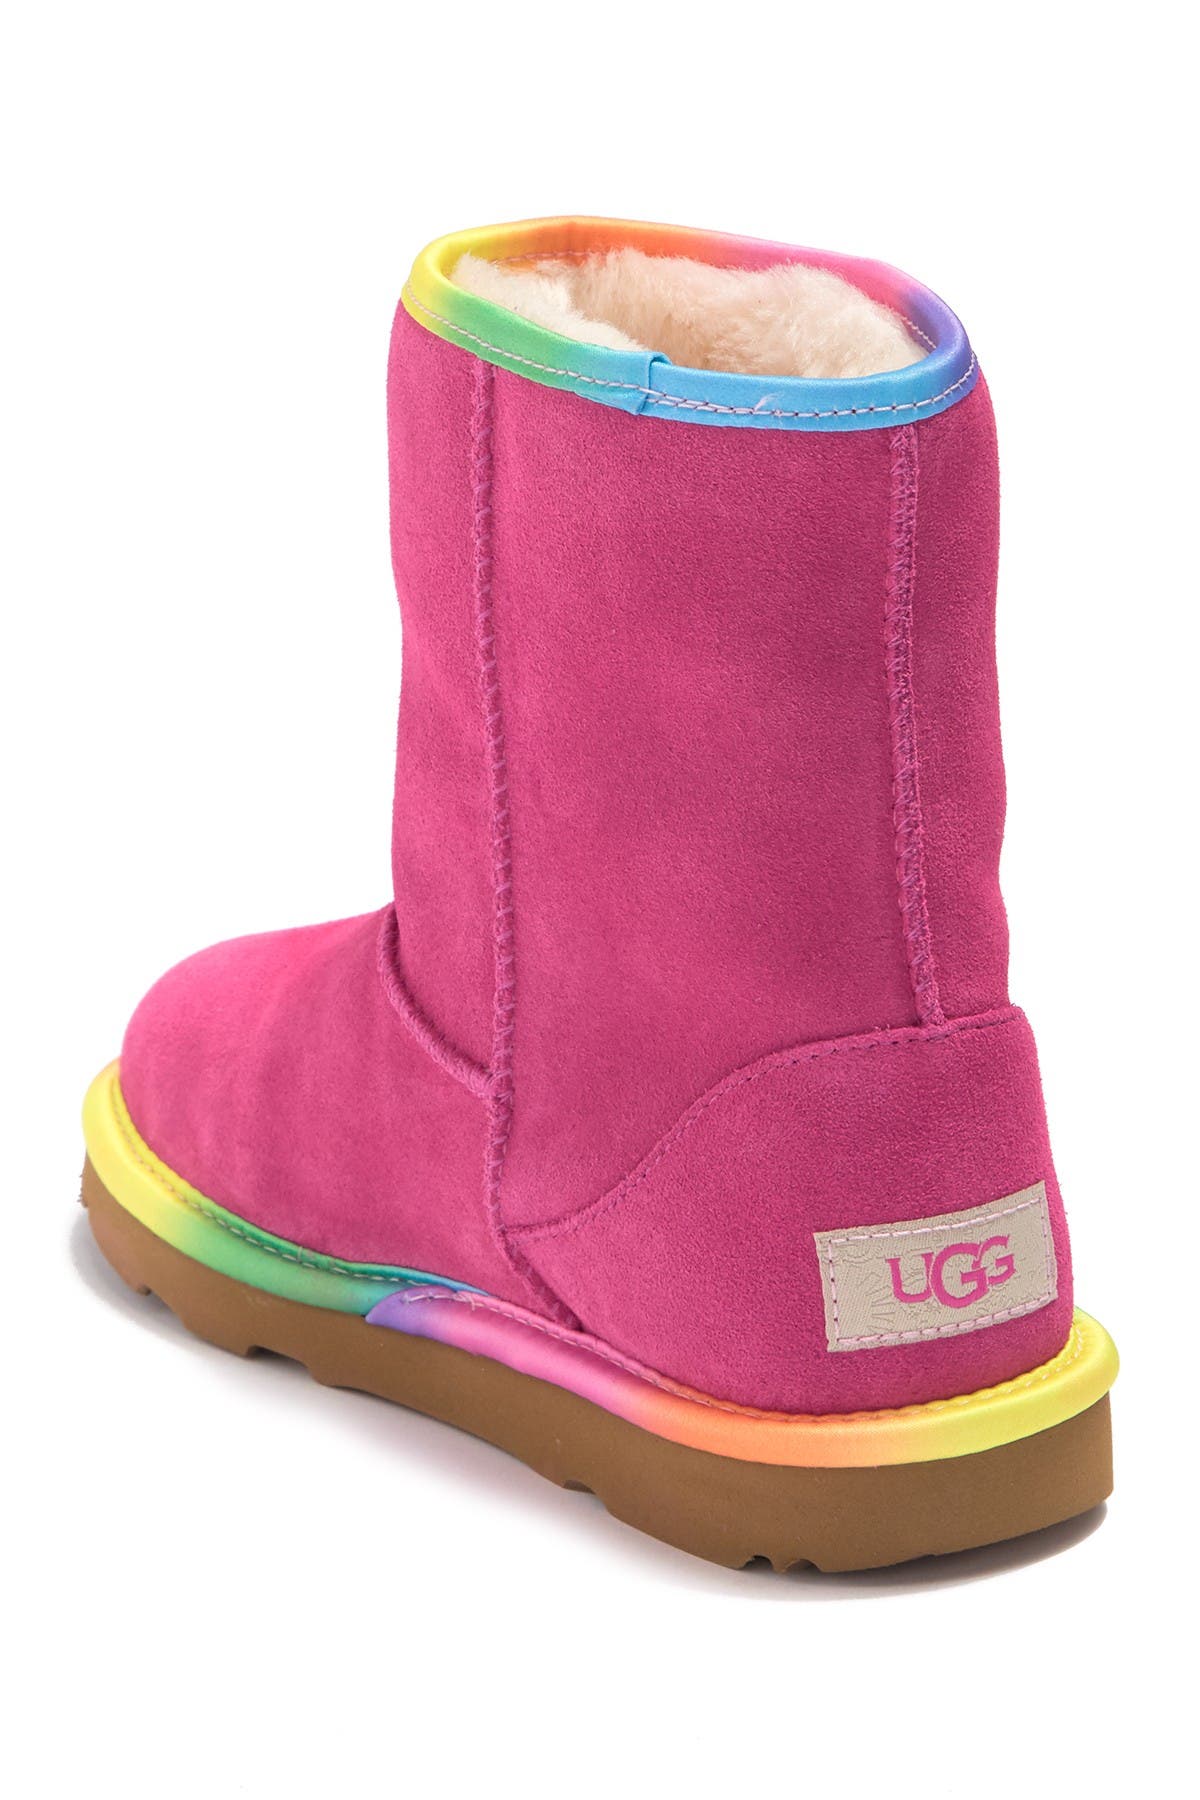 rainbow ugg shoes